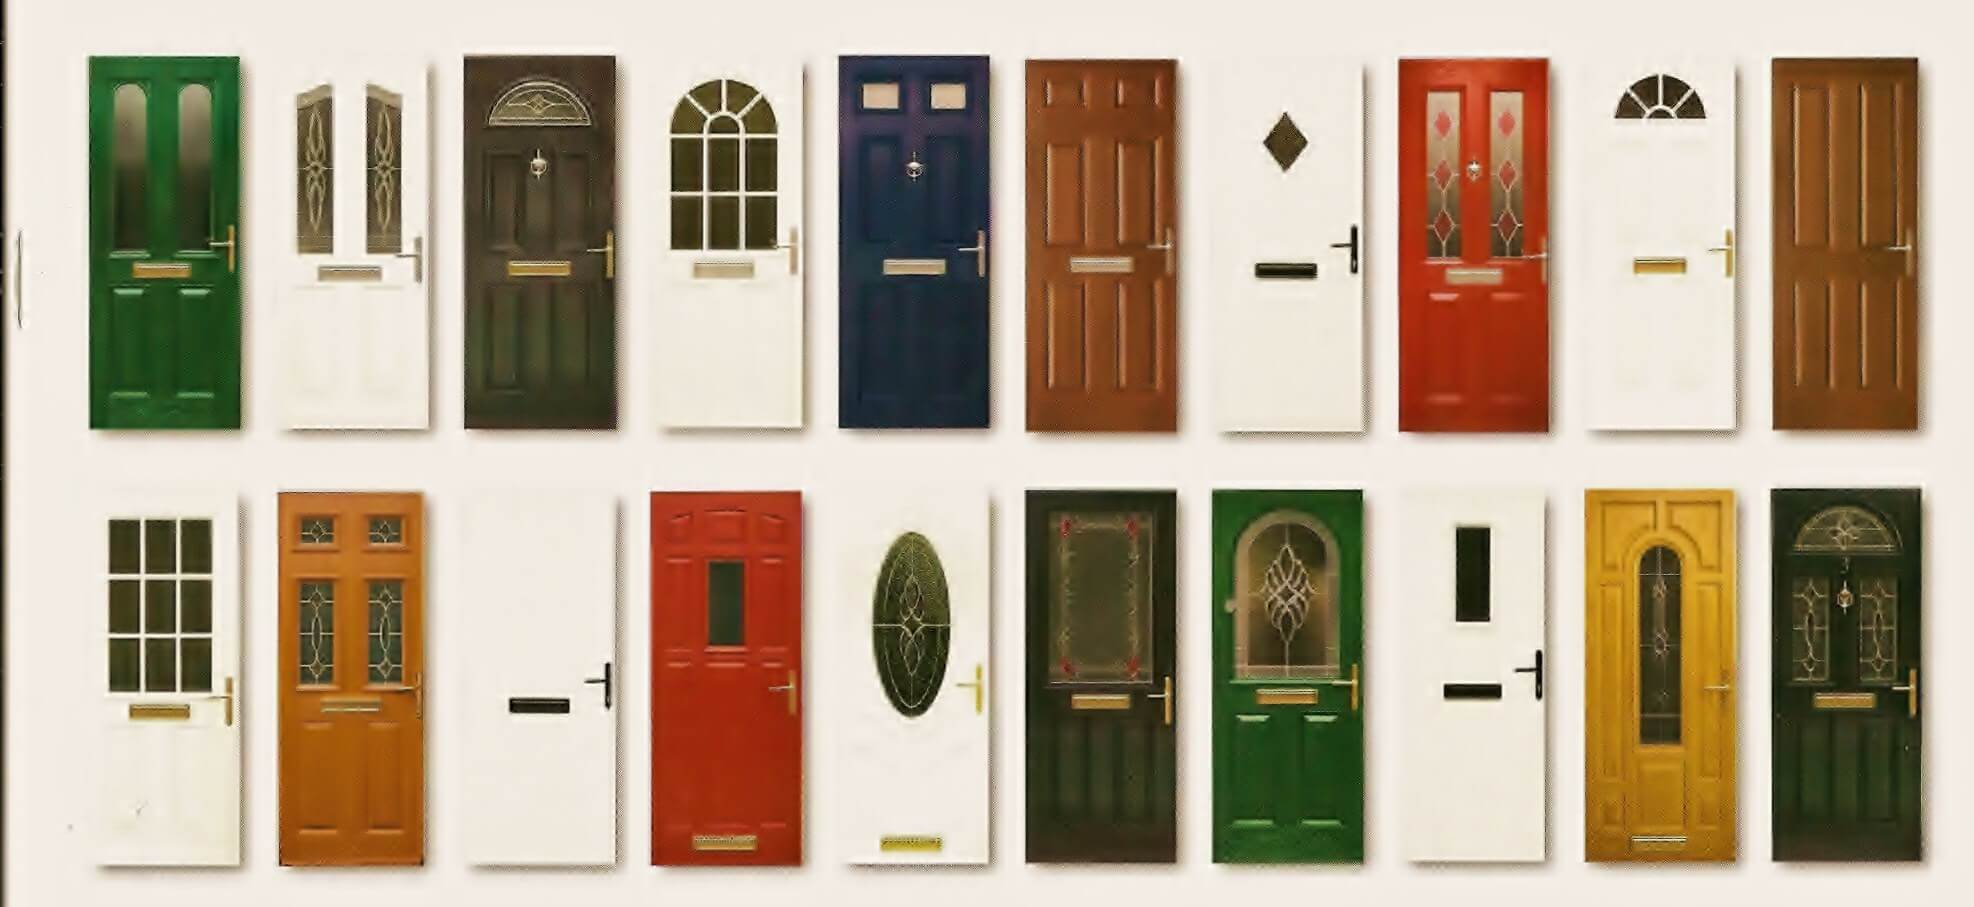 The green old-style door of the 10 door personality test